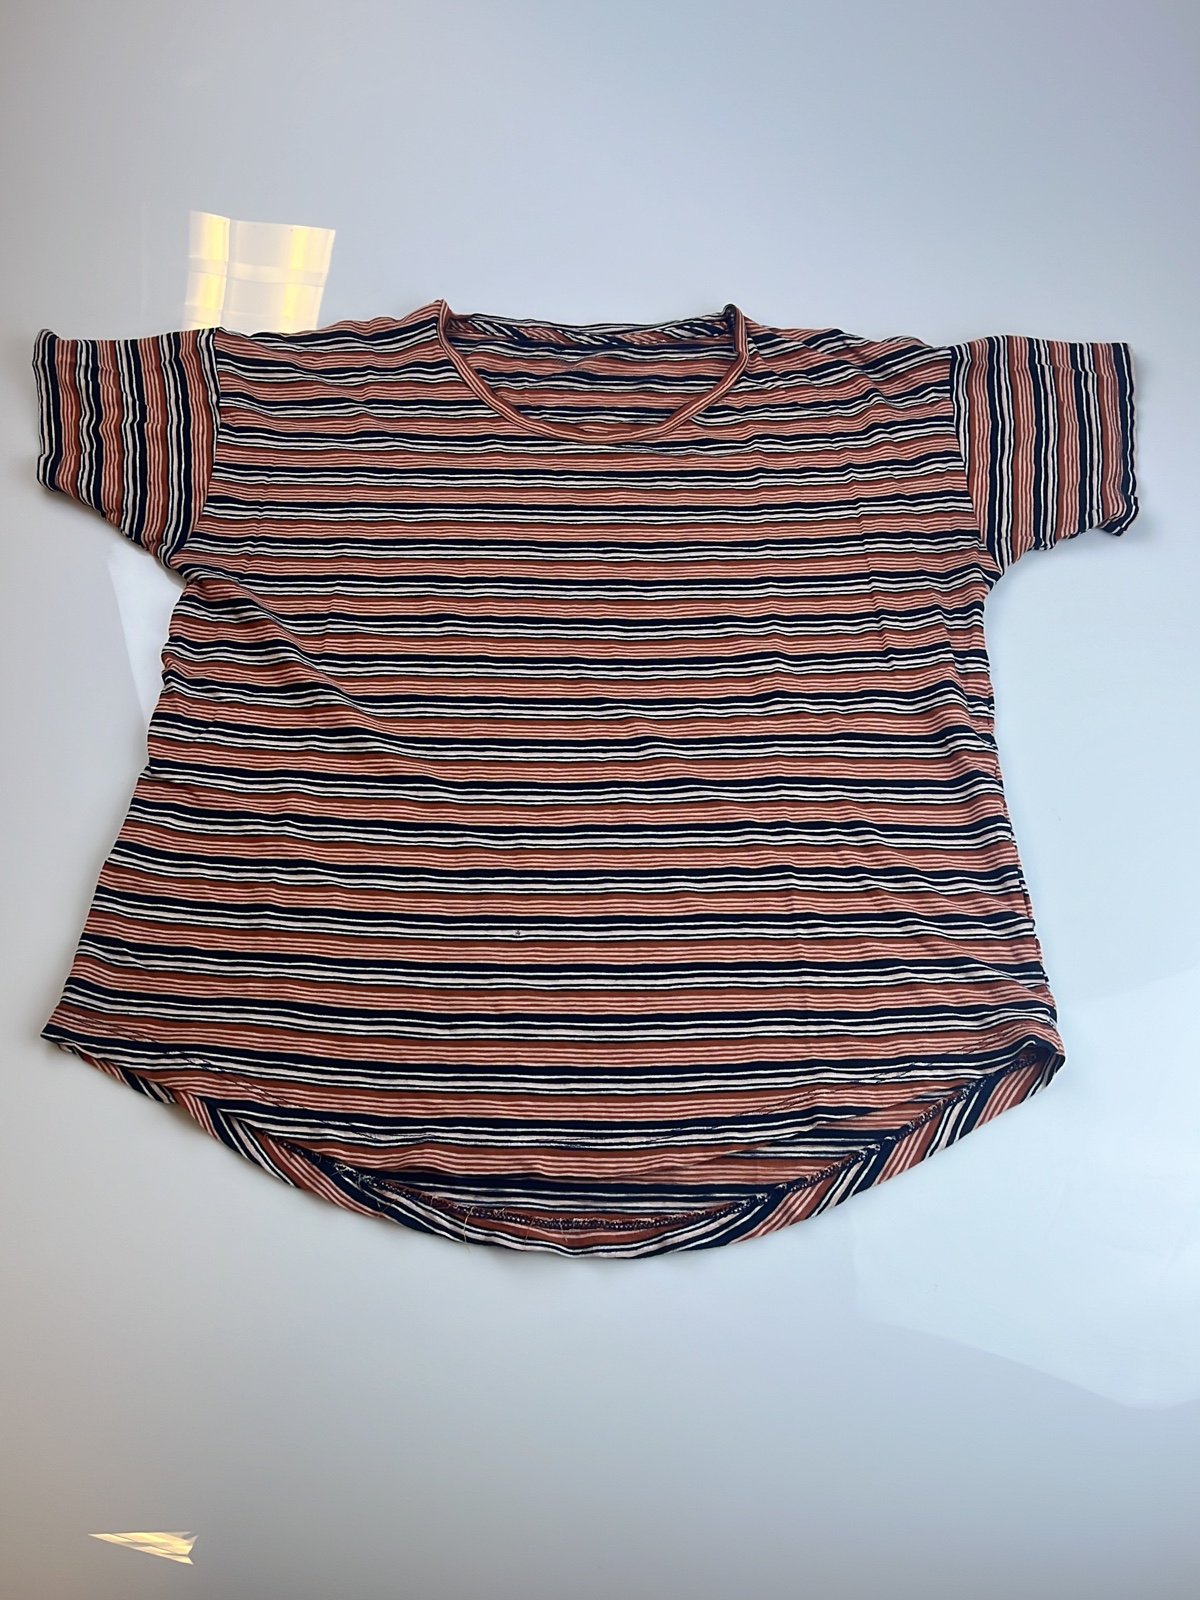 Fashion Madewell Striped Shirt S25-34 gRLfRyFha US Outl